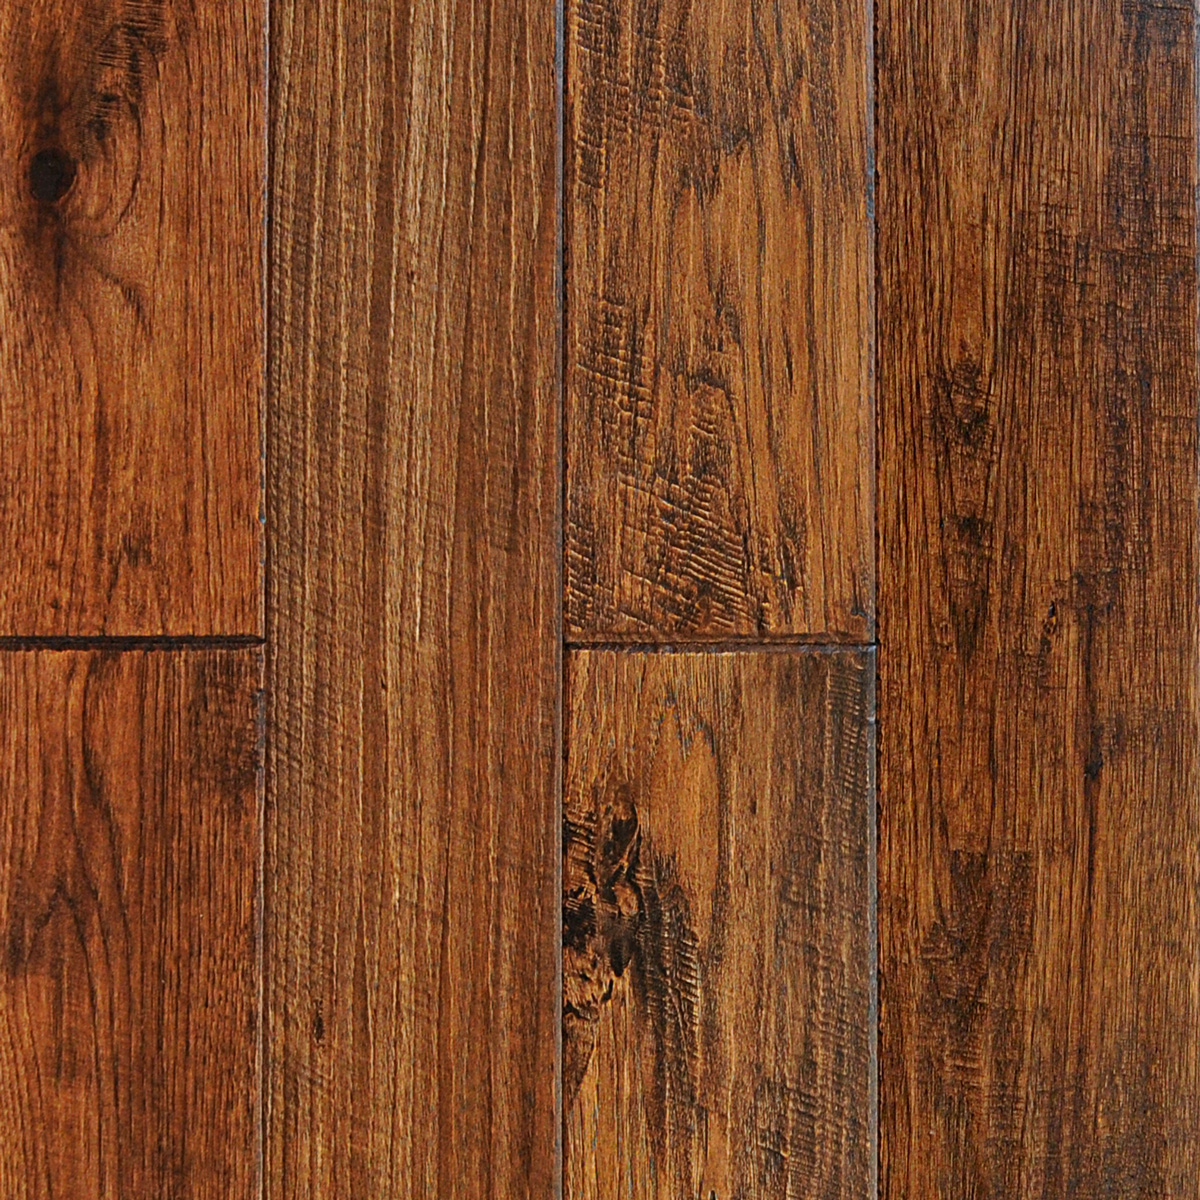 84 Hardwood Flooring Hickory, 84 Lumber Hardwood Flooring